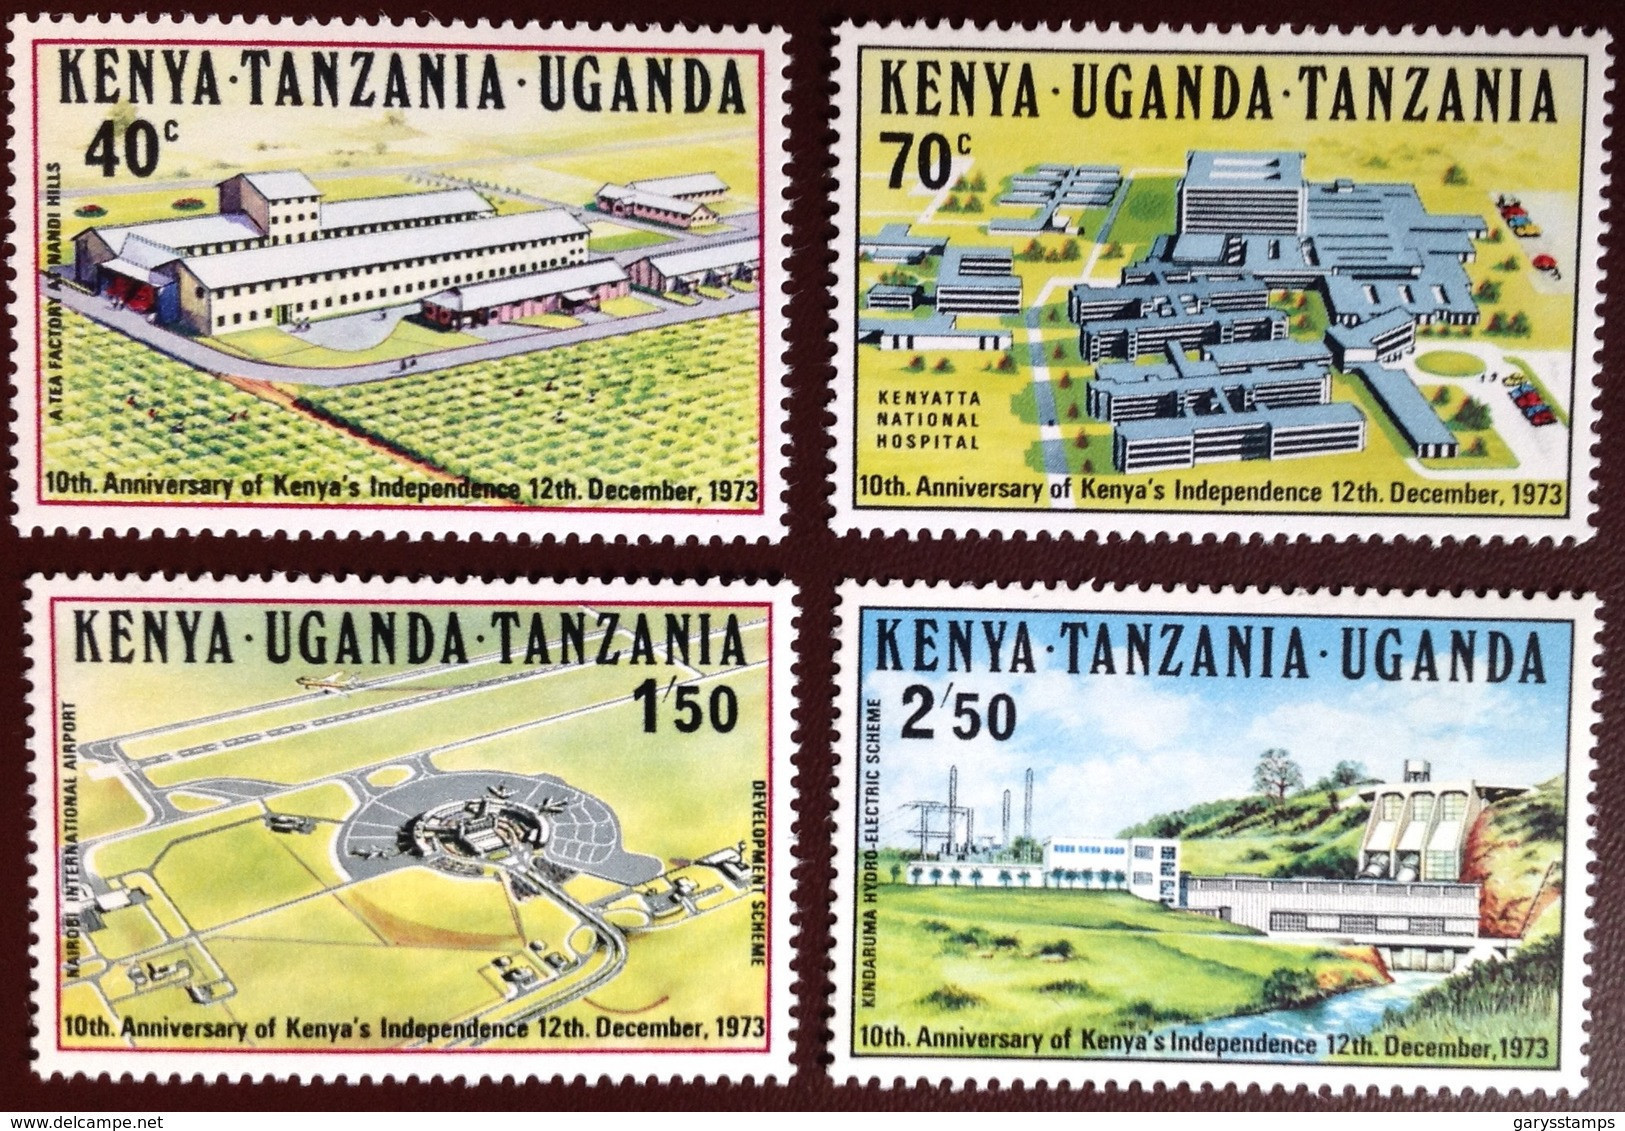 Kenya Uganda Tanzania 1973 Independence Anniversary MNH - Kenya, Uganda & Tanzania